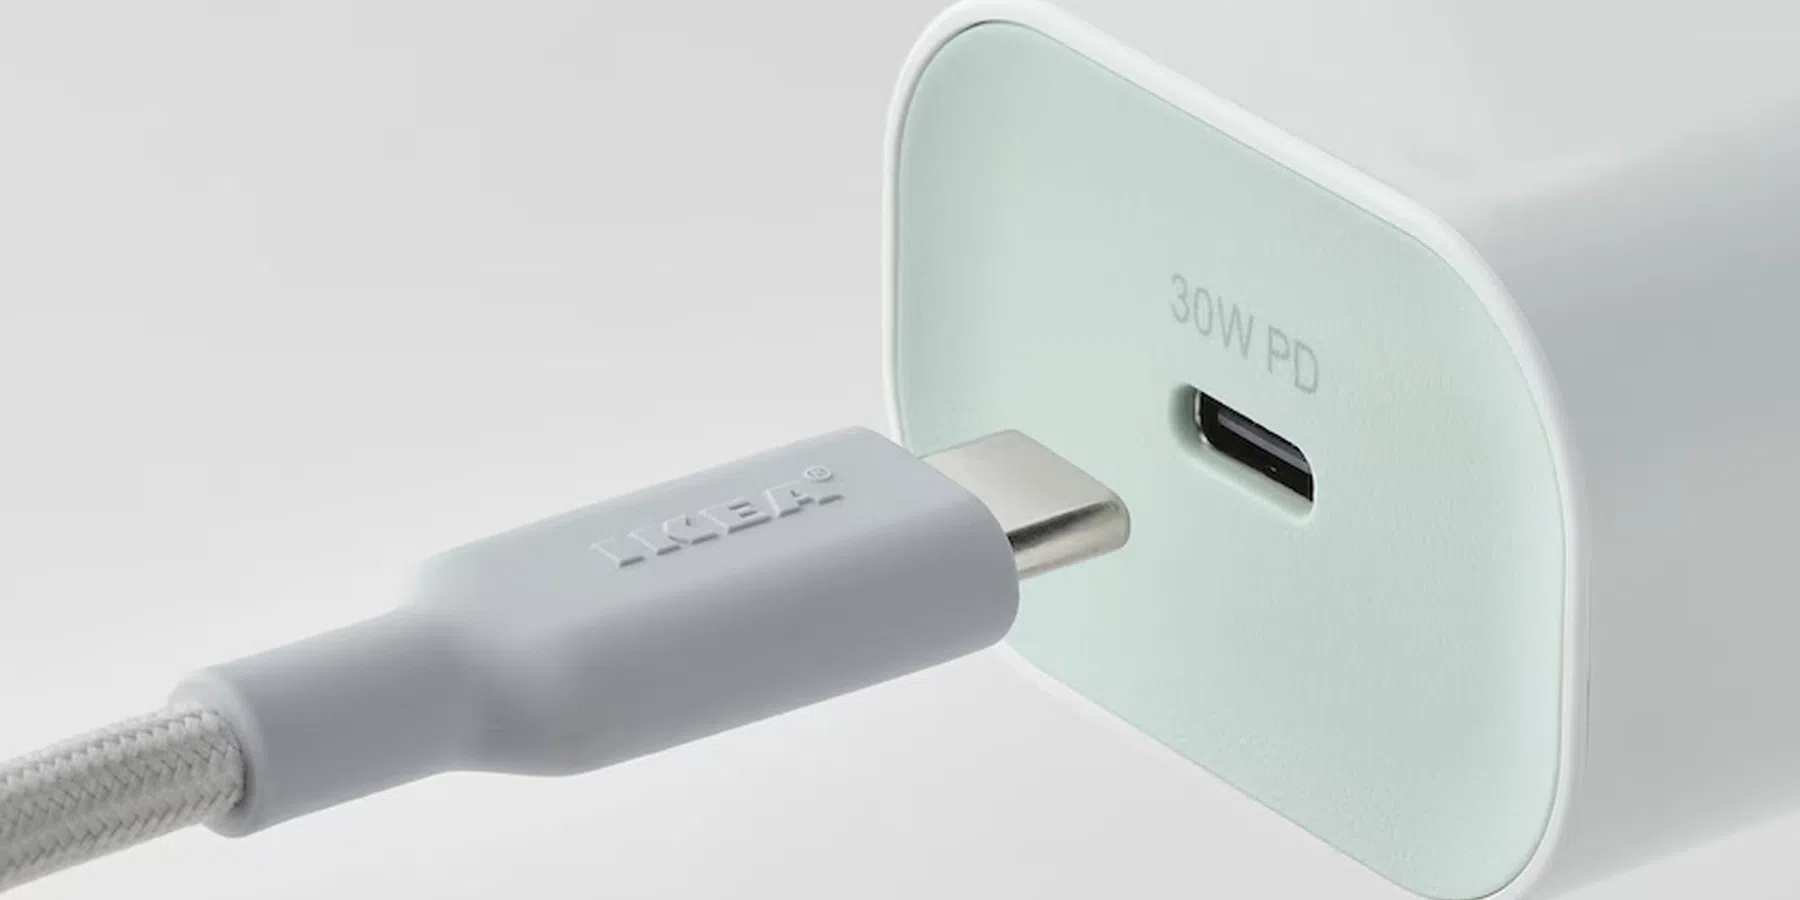 Ikea introduceert spotgoedkope USB-C laders: de ‘Sjöss’